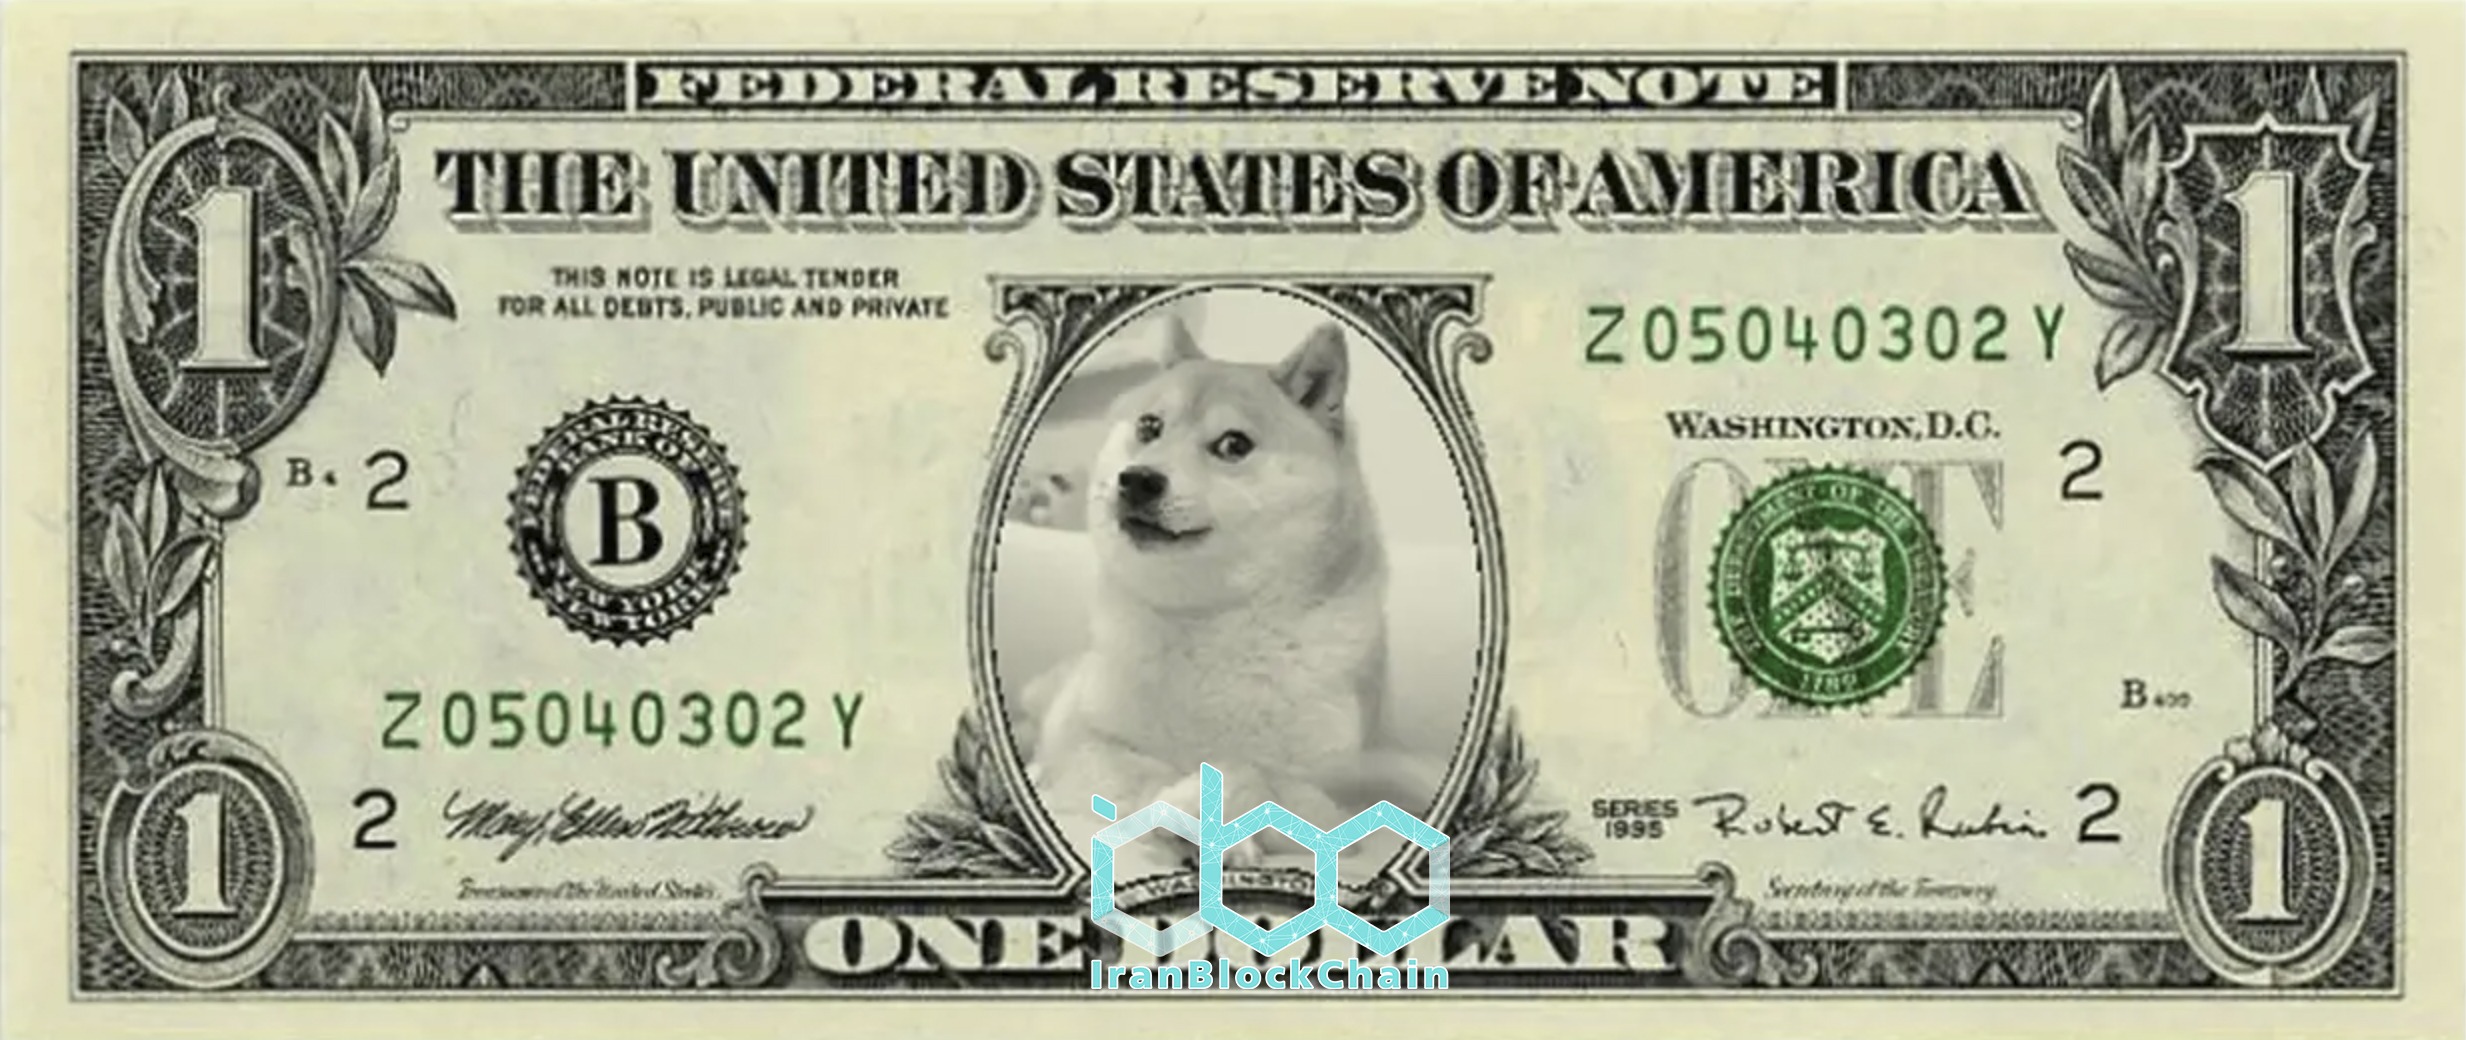 mایا قیمت Dogecoin به 1 دلار میرسد؟ سود 1600 درصدی در دو هفته